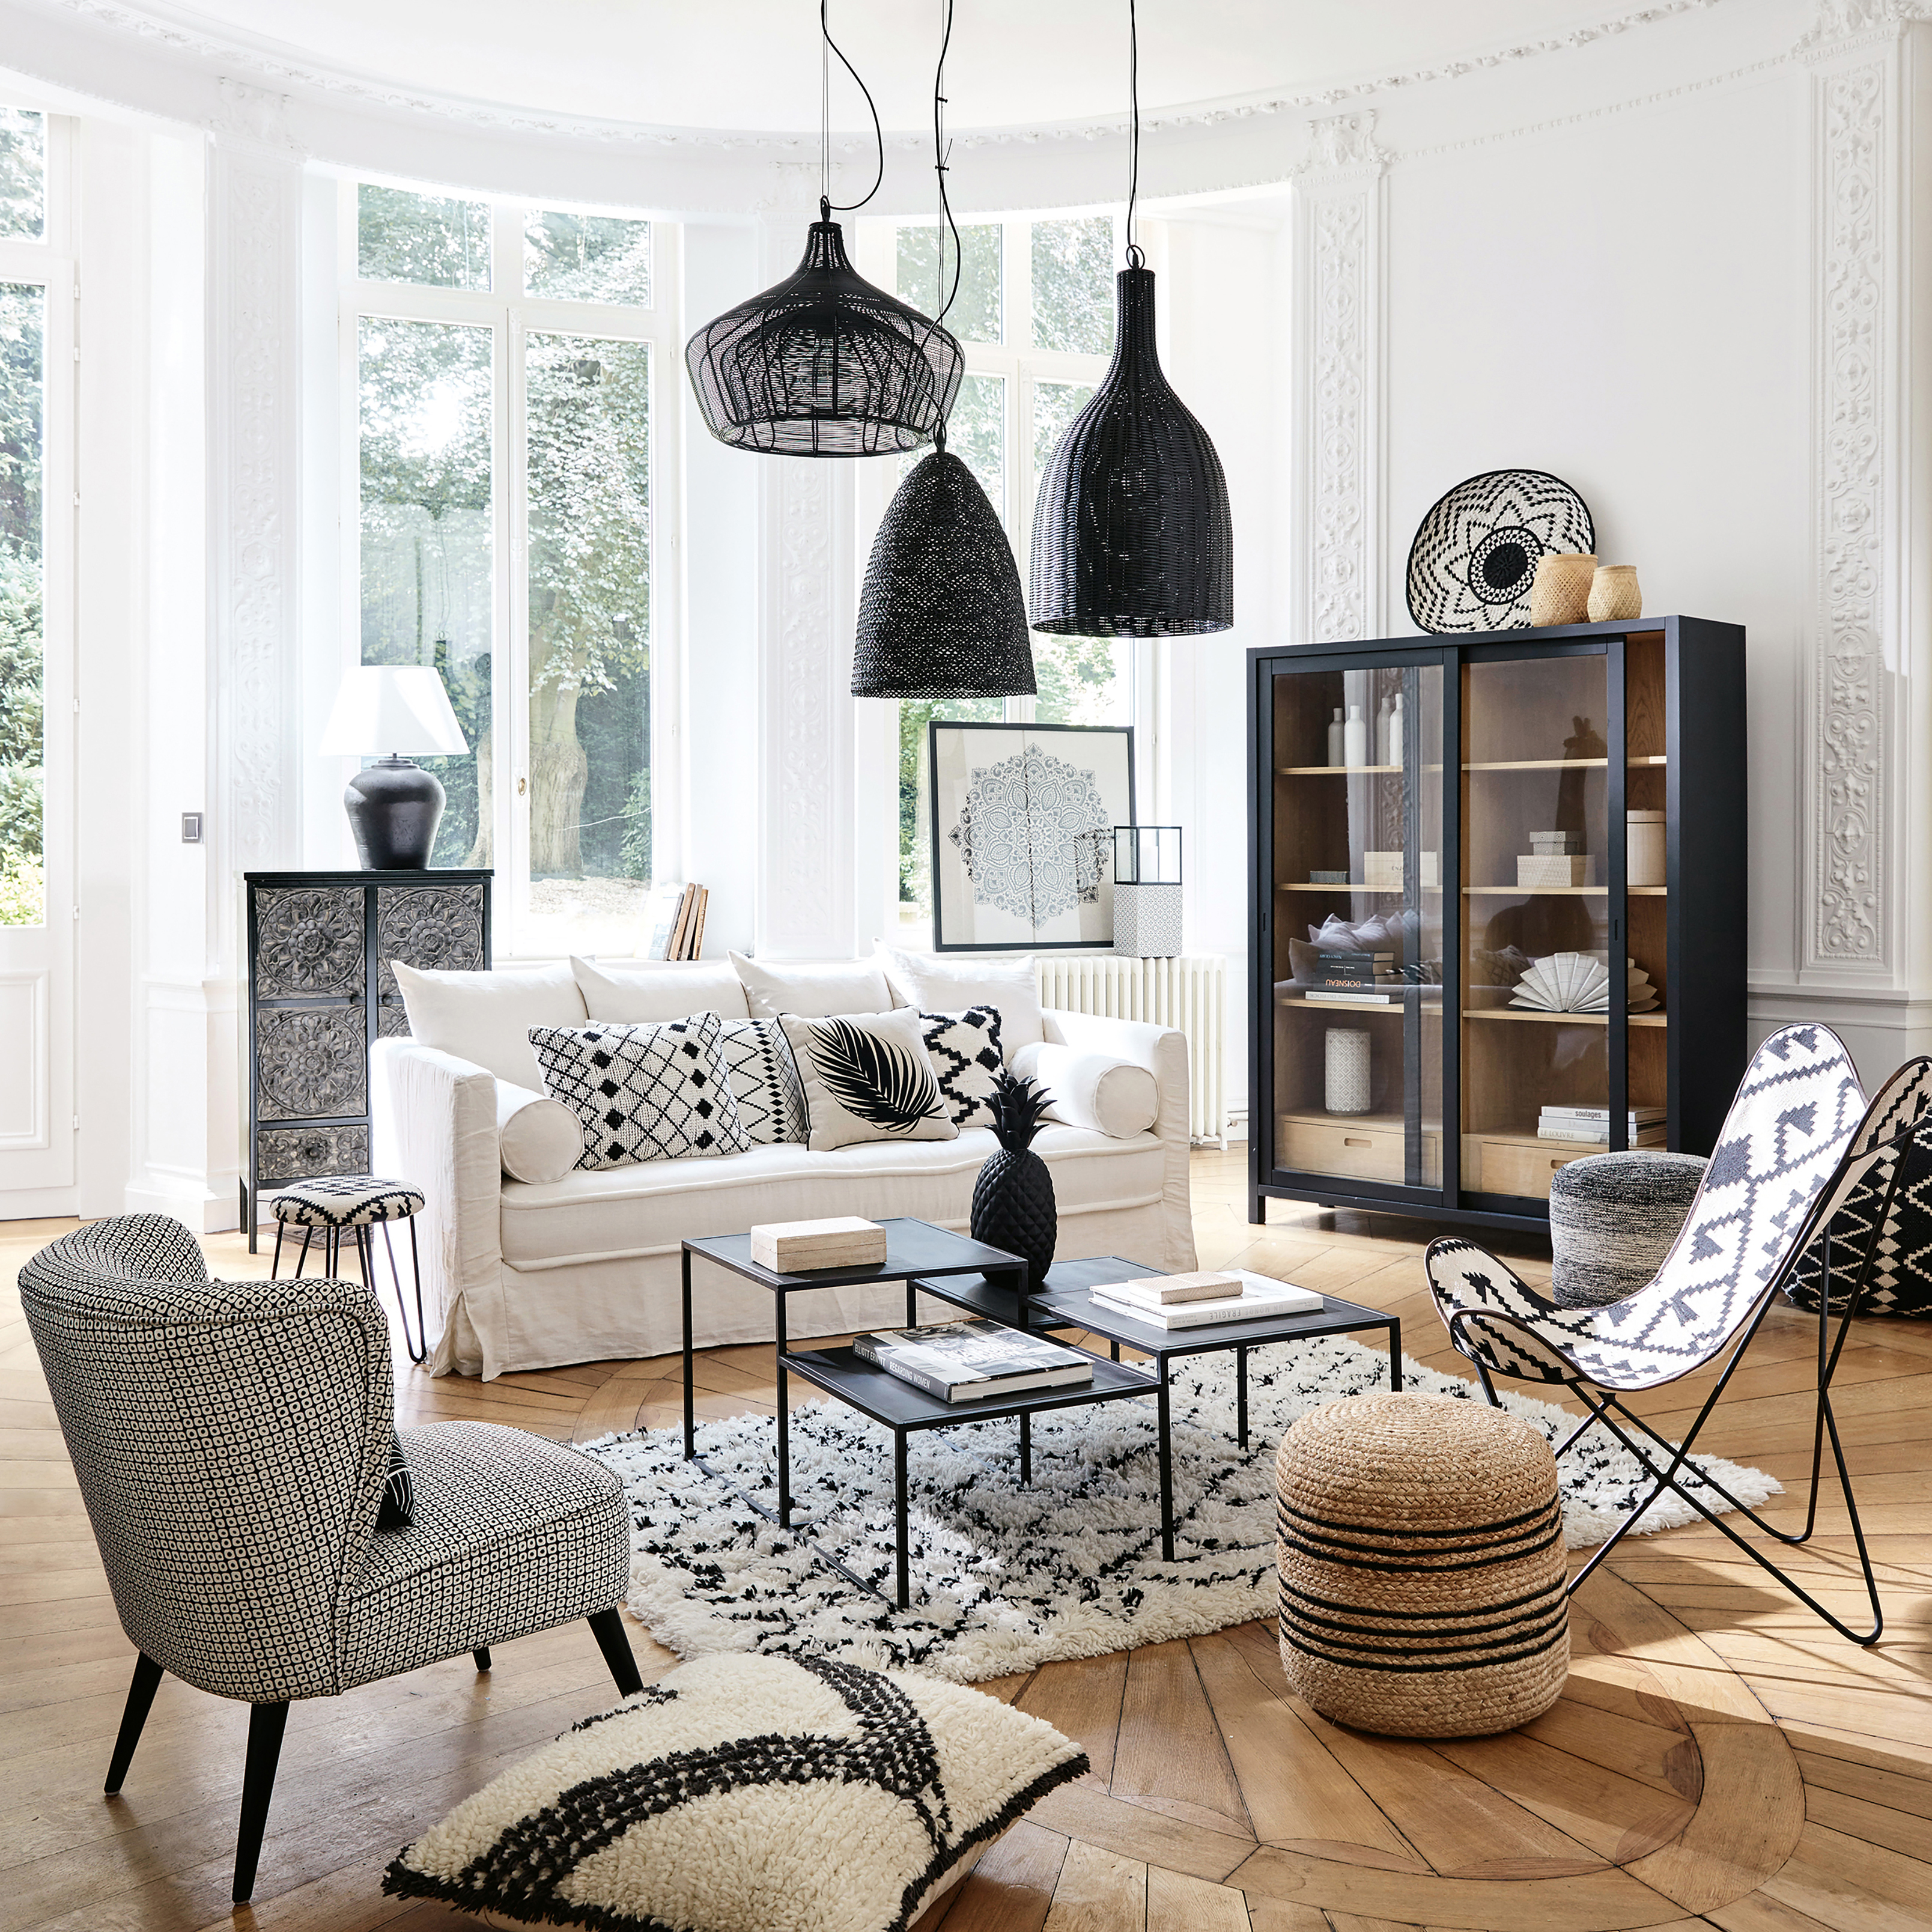 Statement Furniture For An Impressive Interior